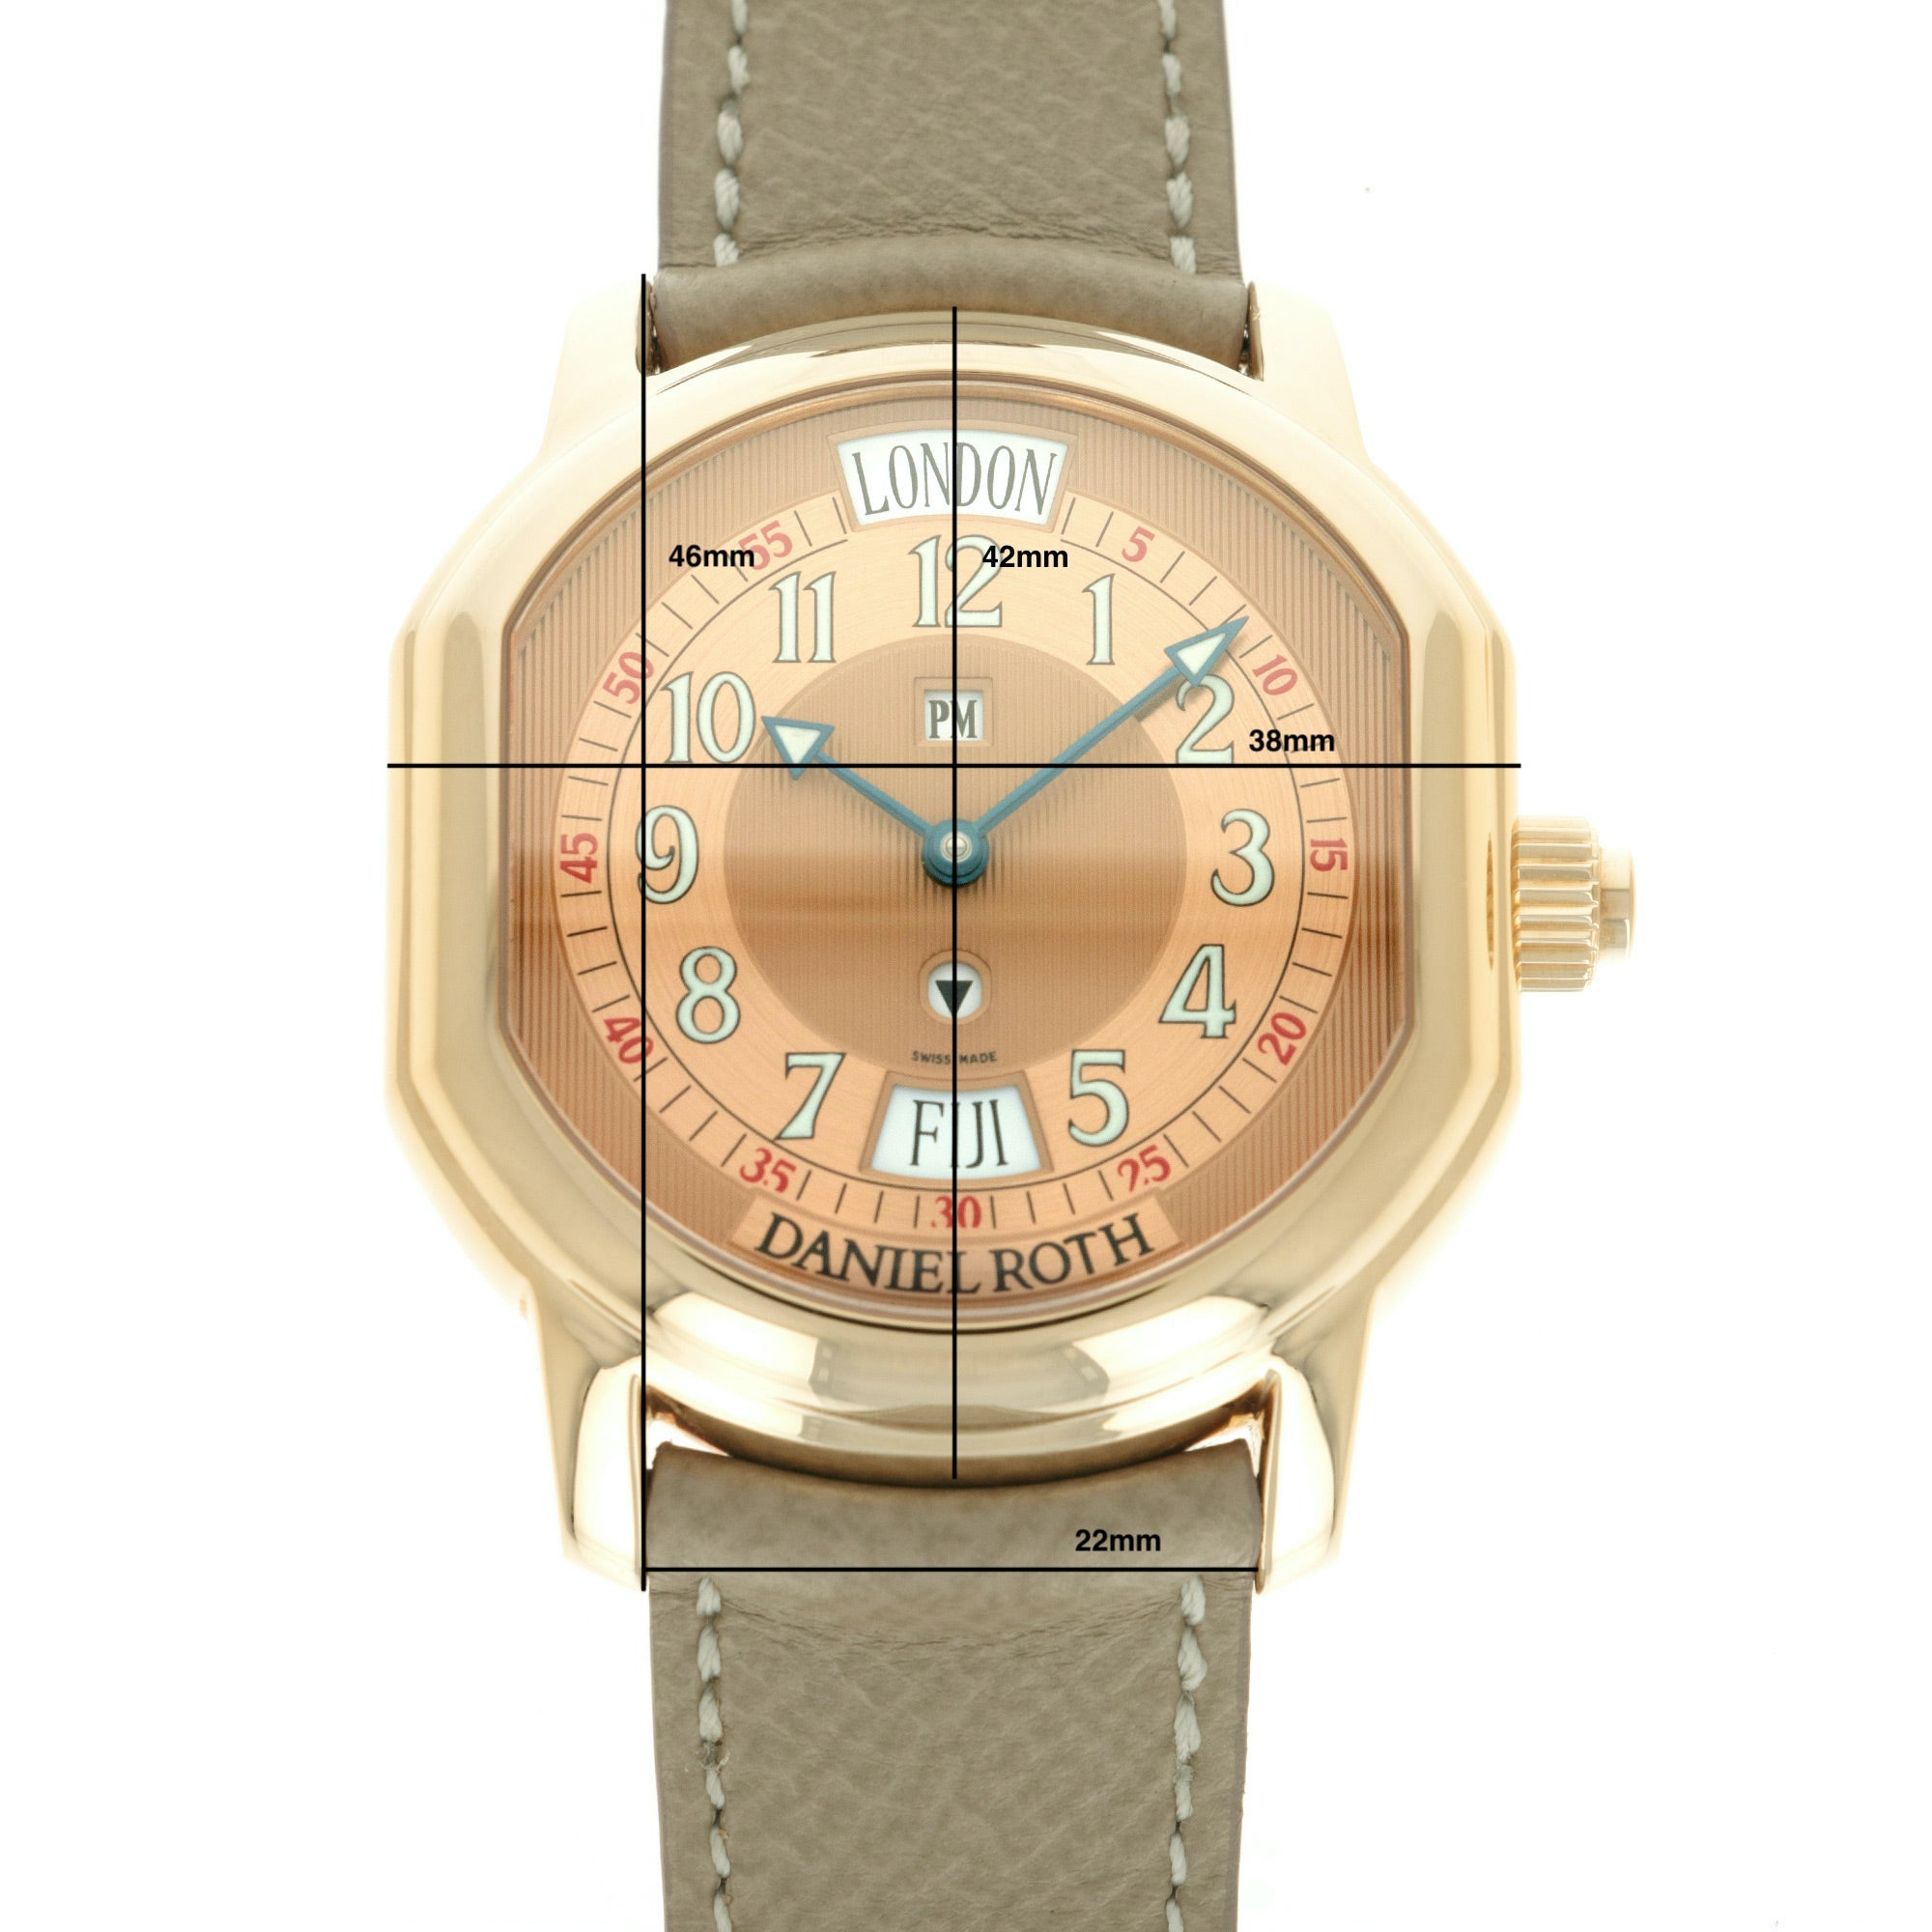 Daniel Roth - Daniel Roth Rose Gold Metropolitan World Time Watch - The Keystone Watches